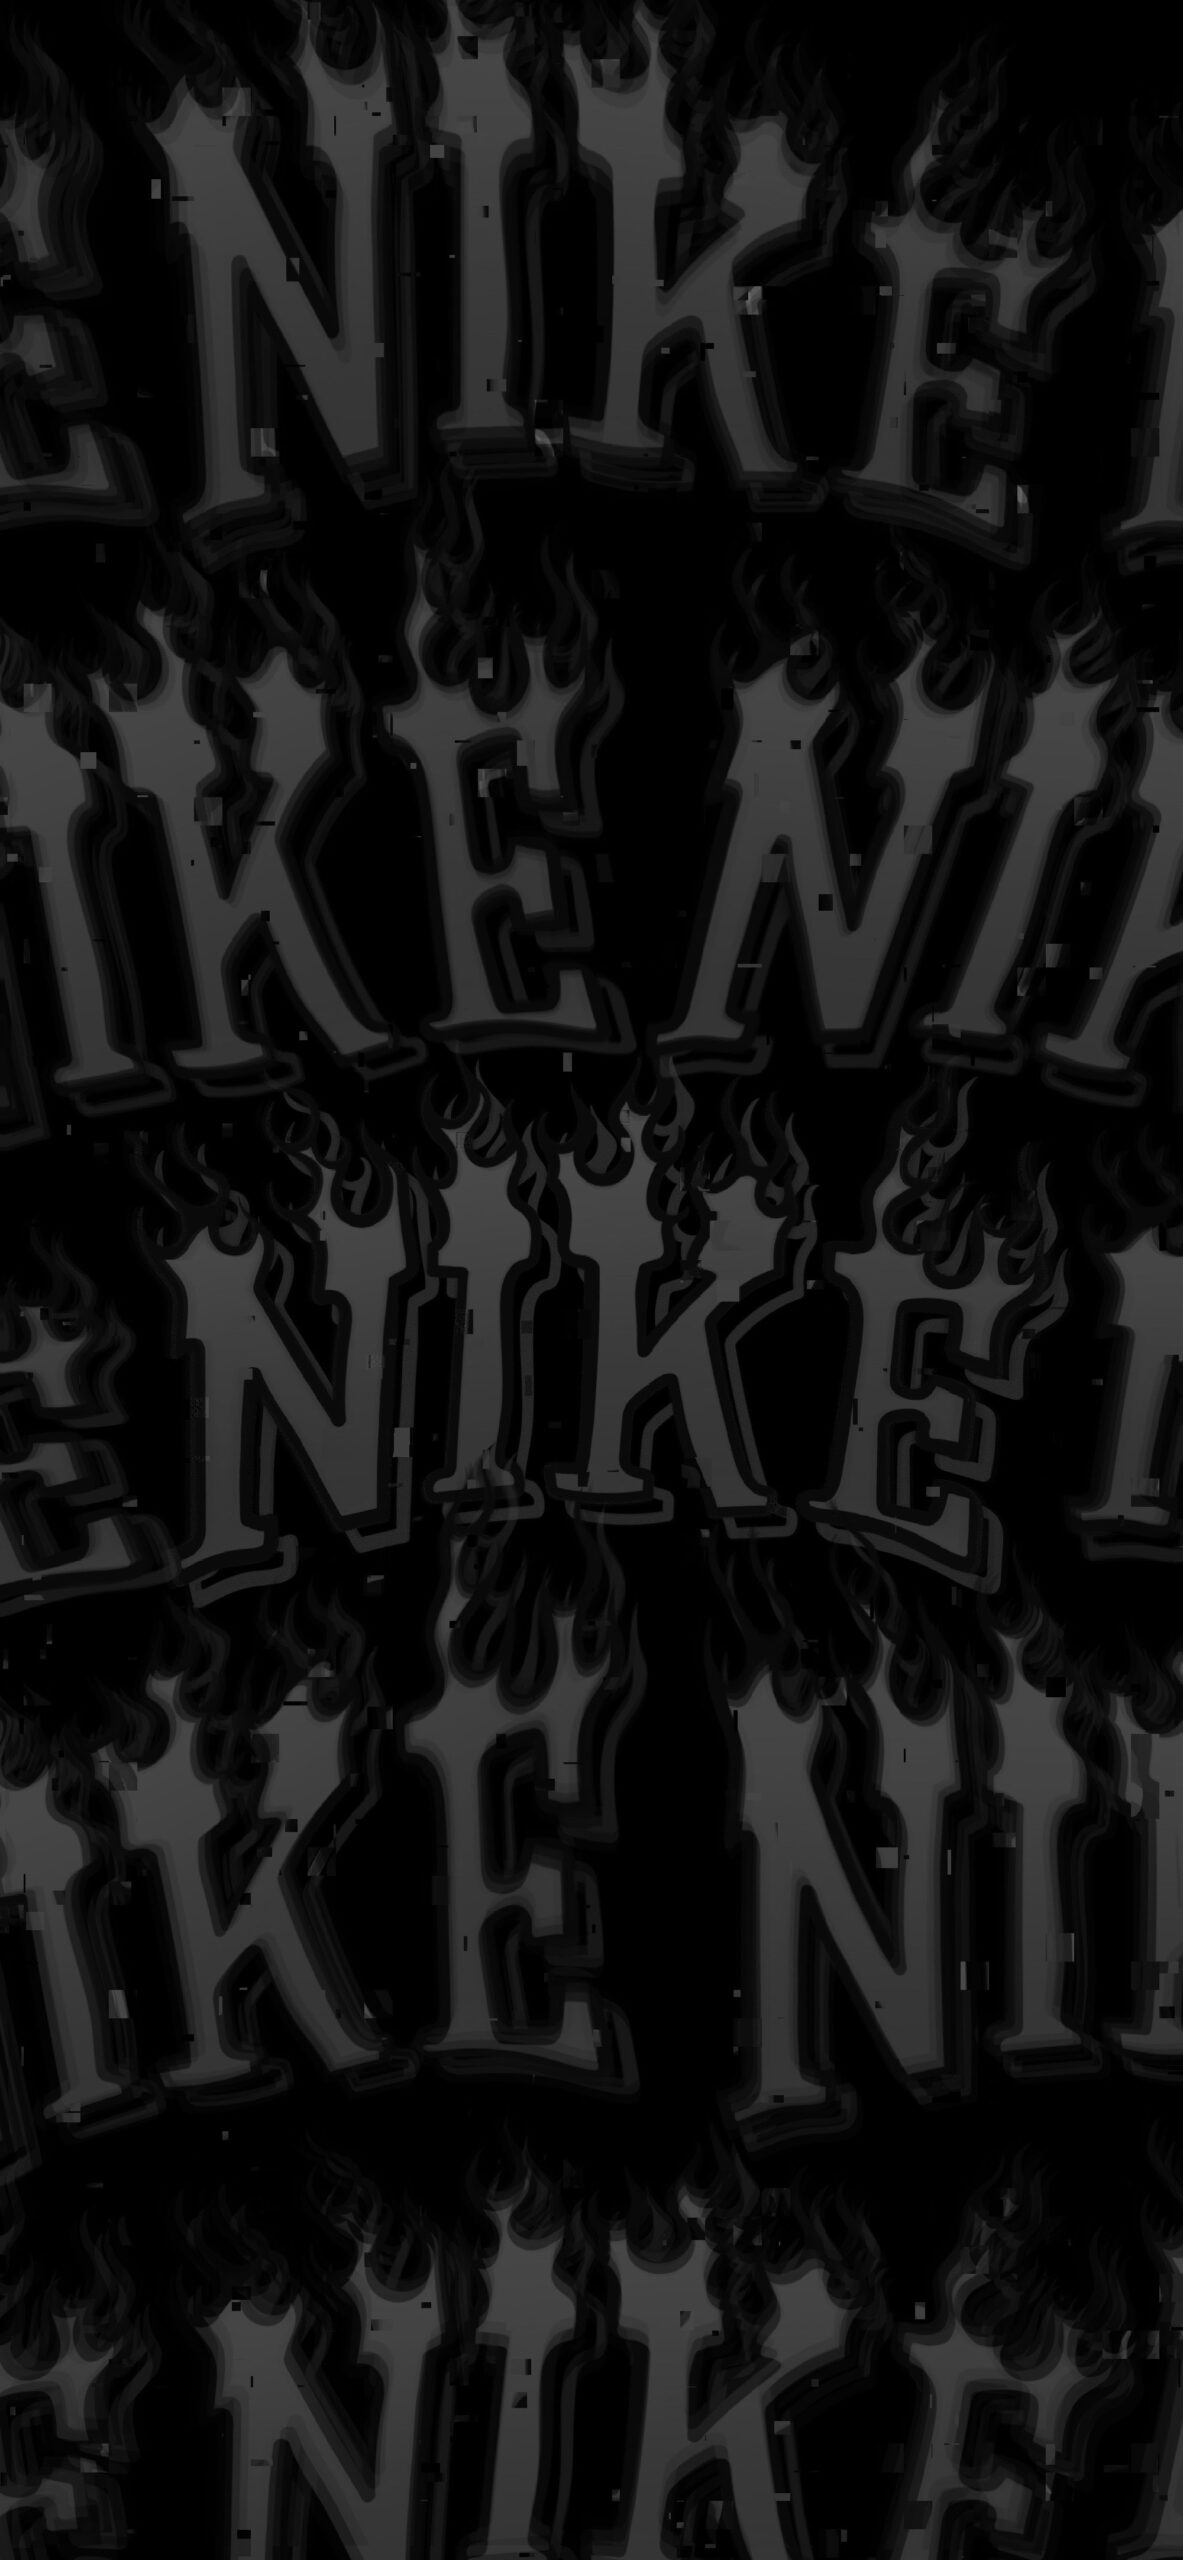 nike flame logo black background